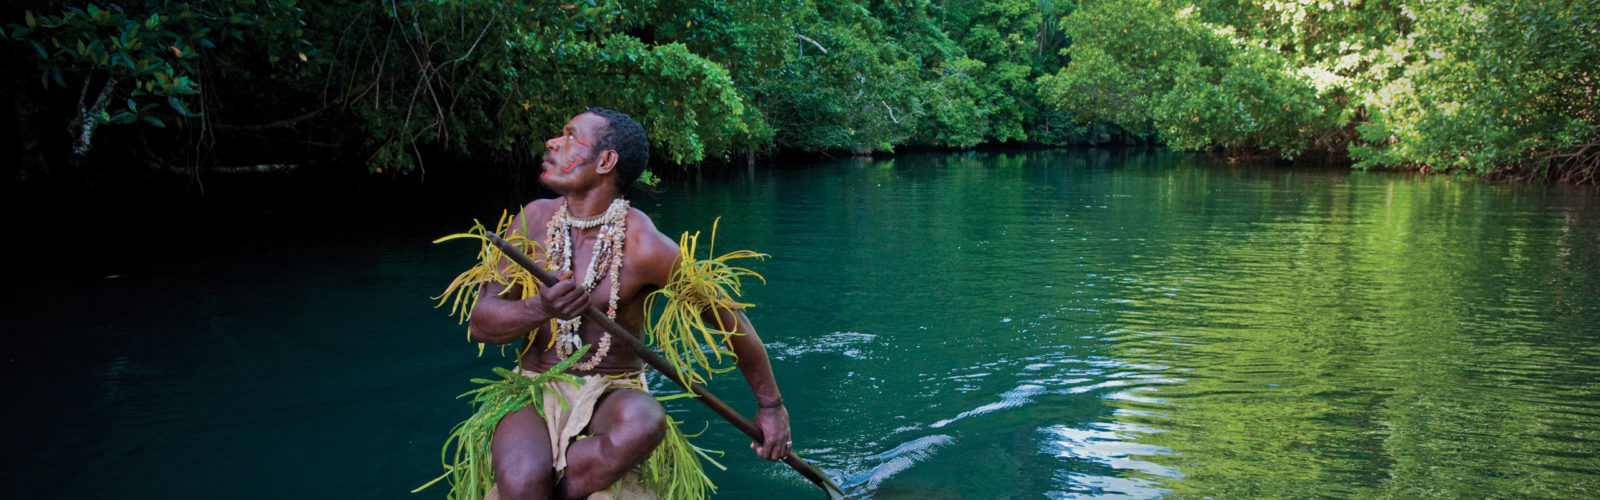 tufi-canoe-villager-papua-new-guinea